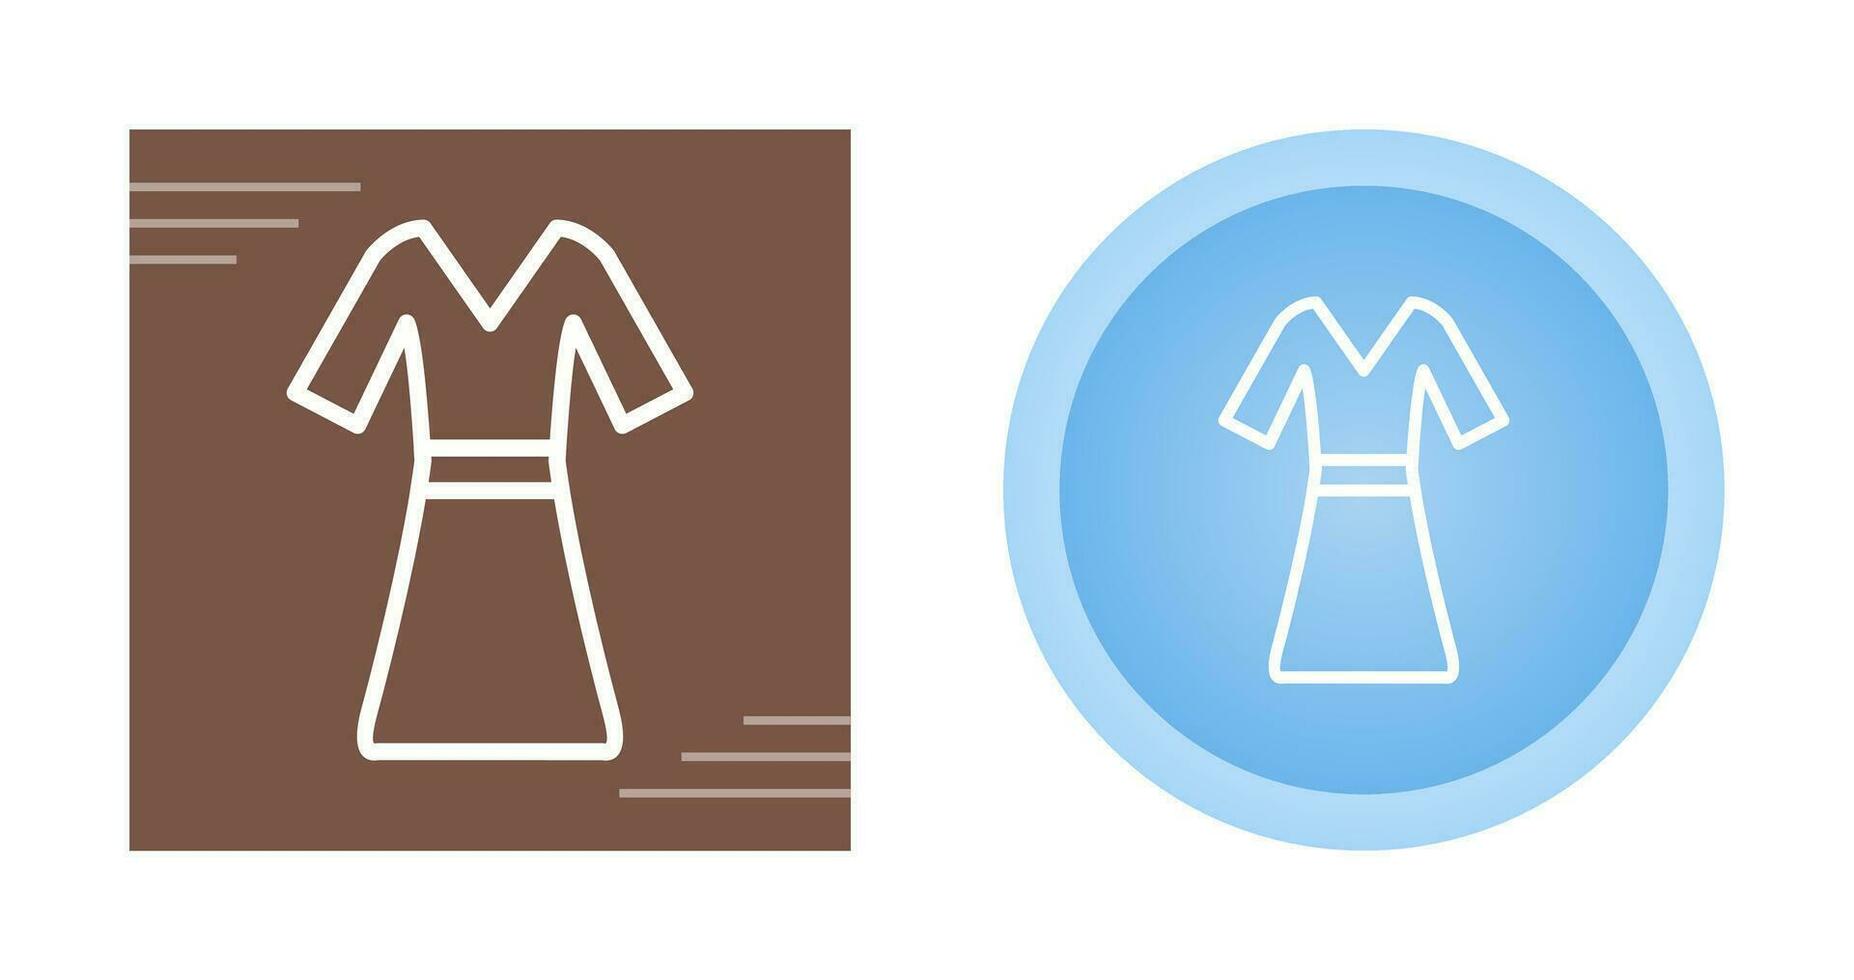 Vektorsymbol für Kleidung vektor